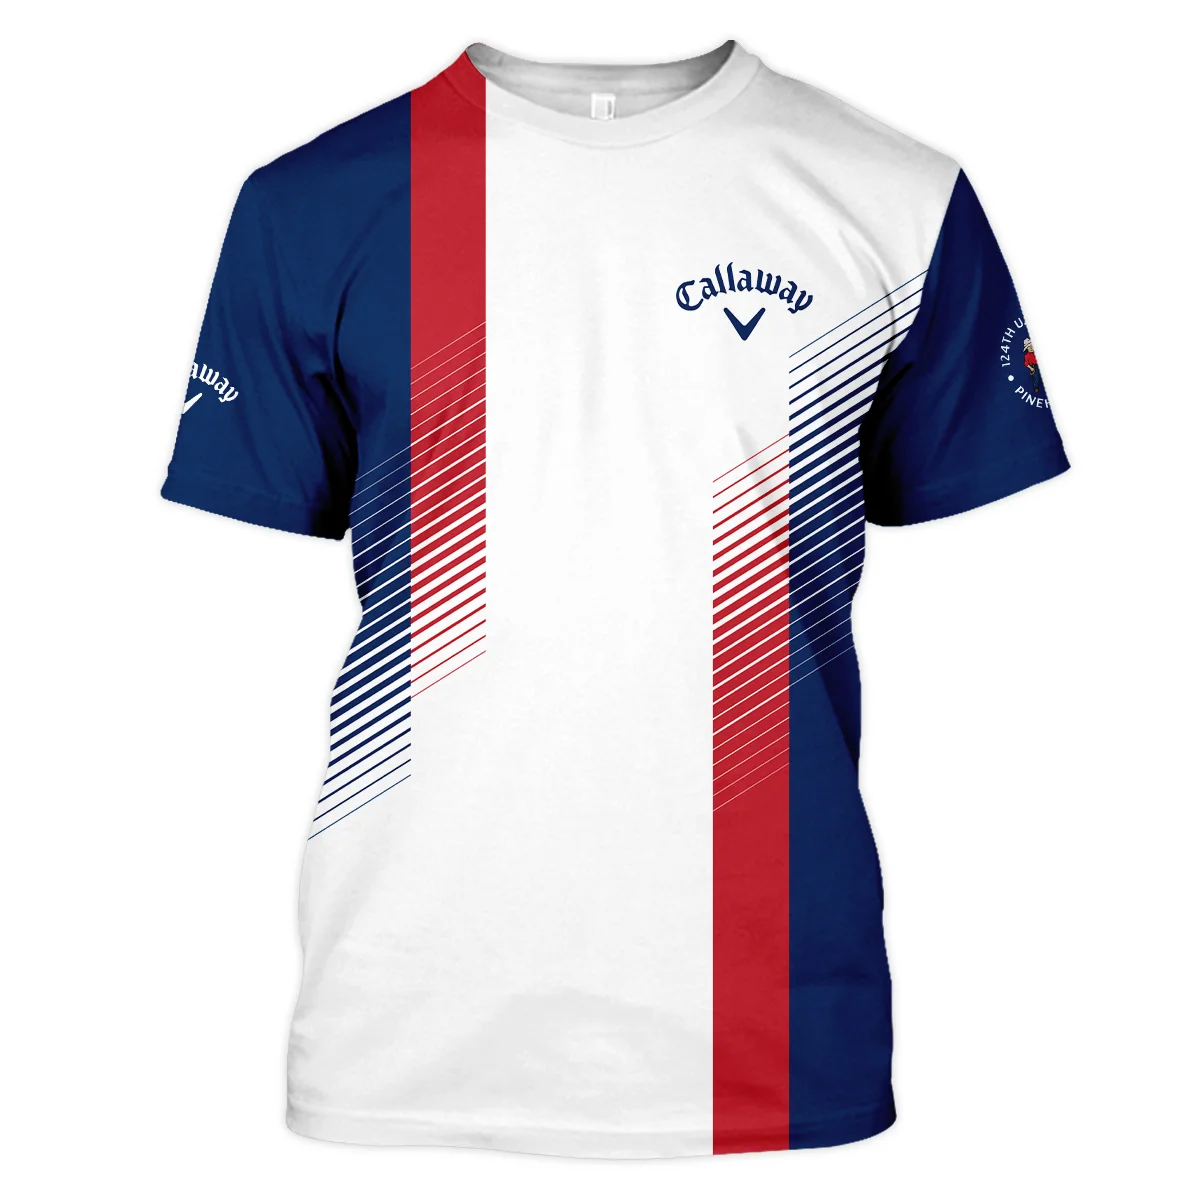 Sport Callaway 124th U.S. Open Pinehurst Golf Unisex T-Shirt Blue Red Striped Pattern White All Over Print T-Shirt